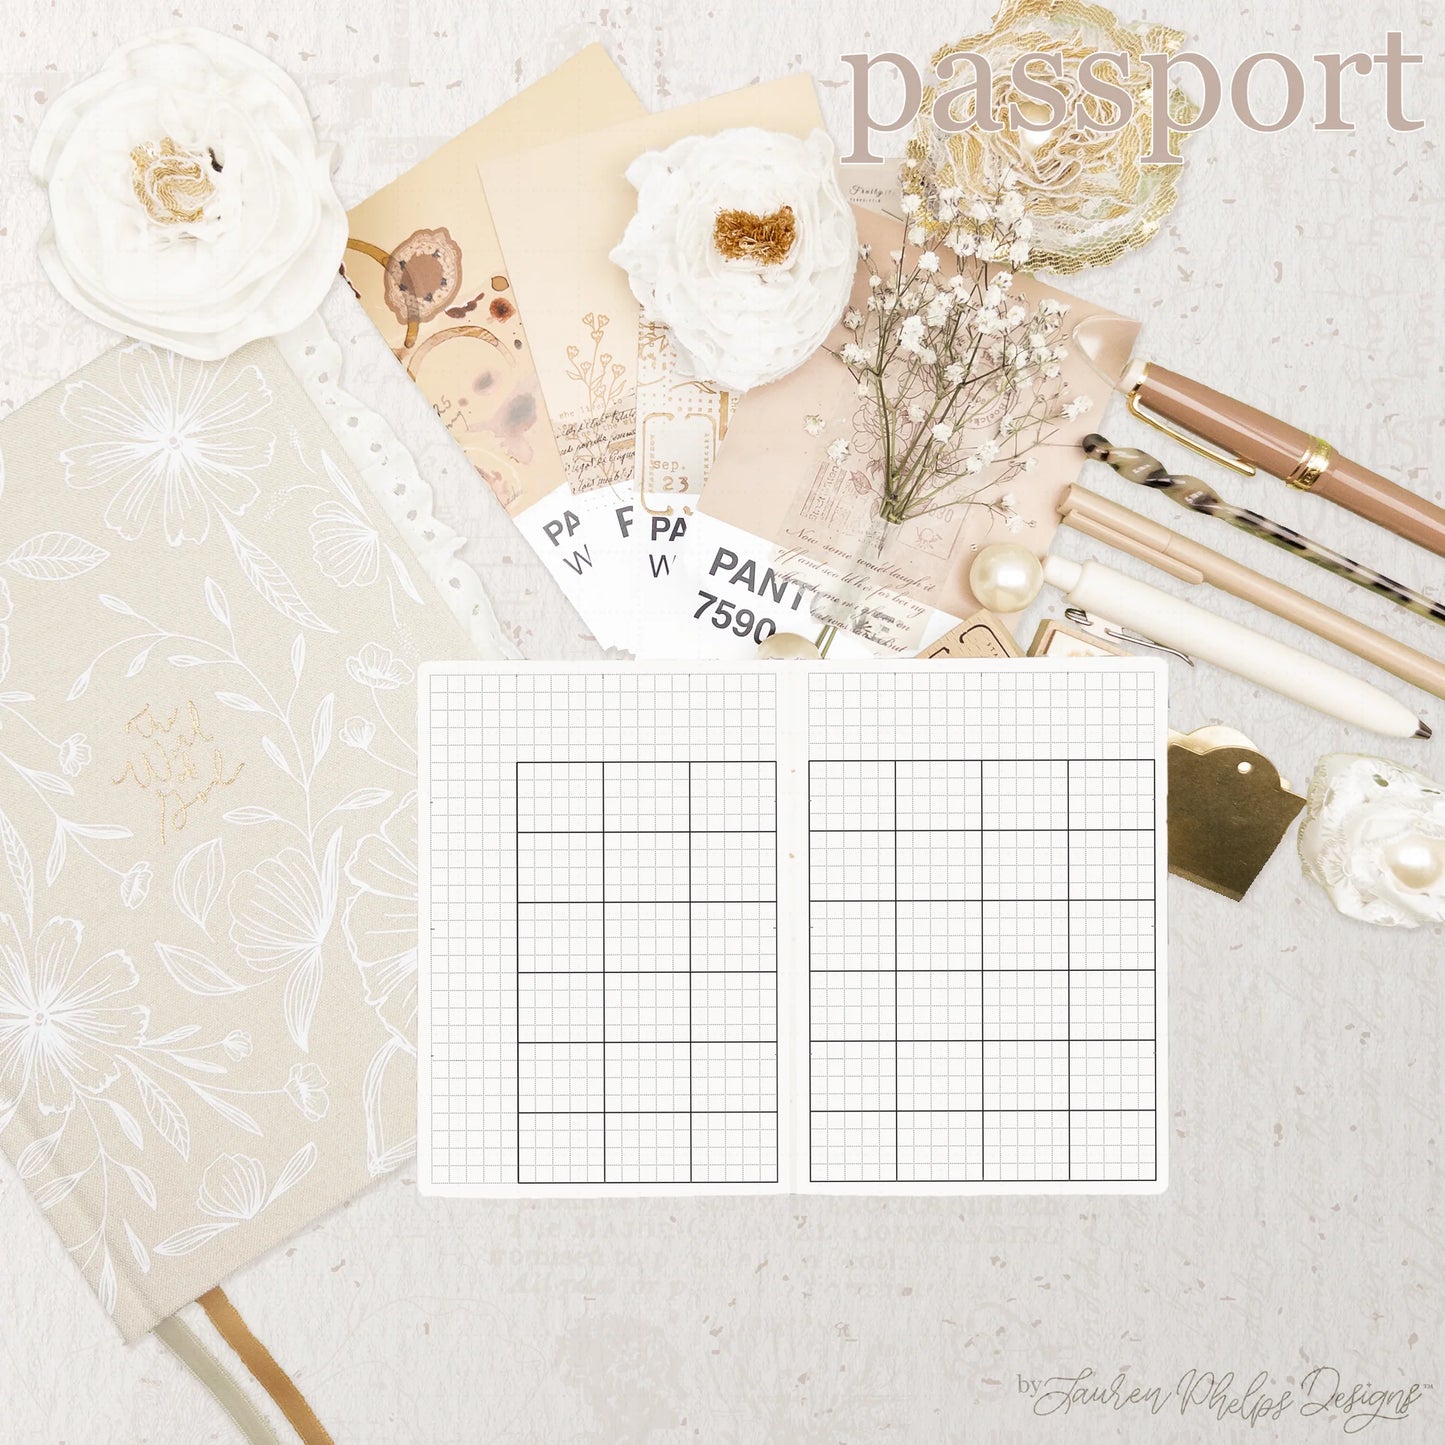 Passport Travelers Live | Plan | Dream™ Notebook by Lauren Phelps Designs